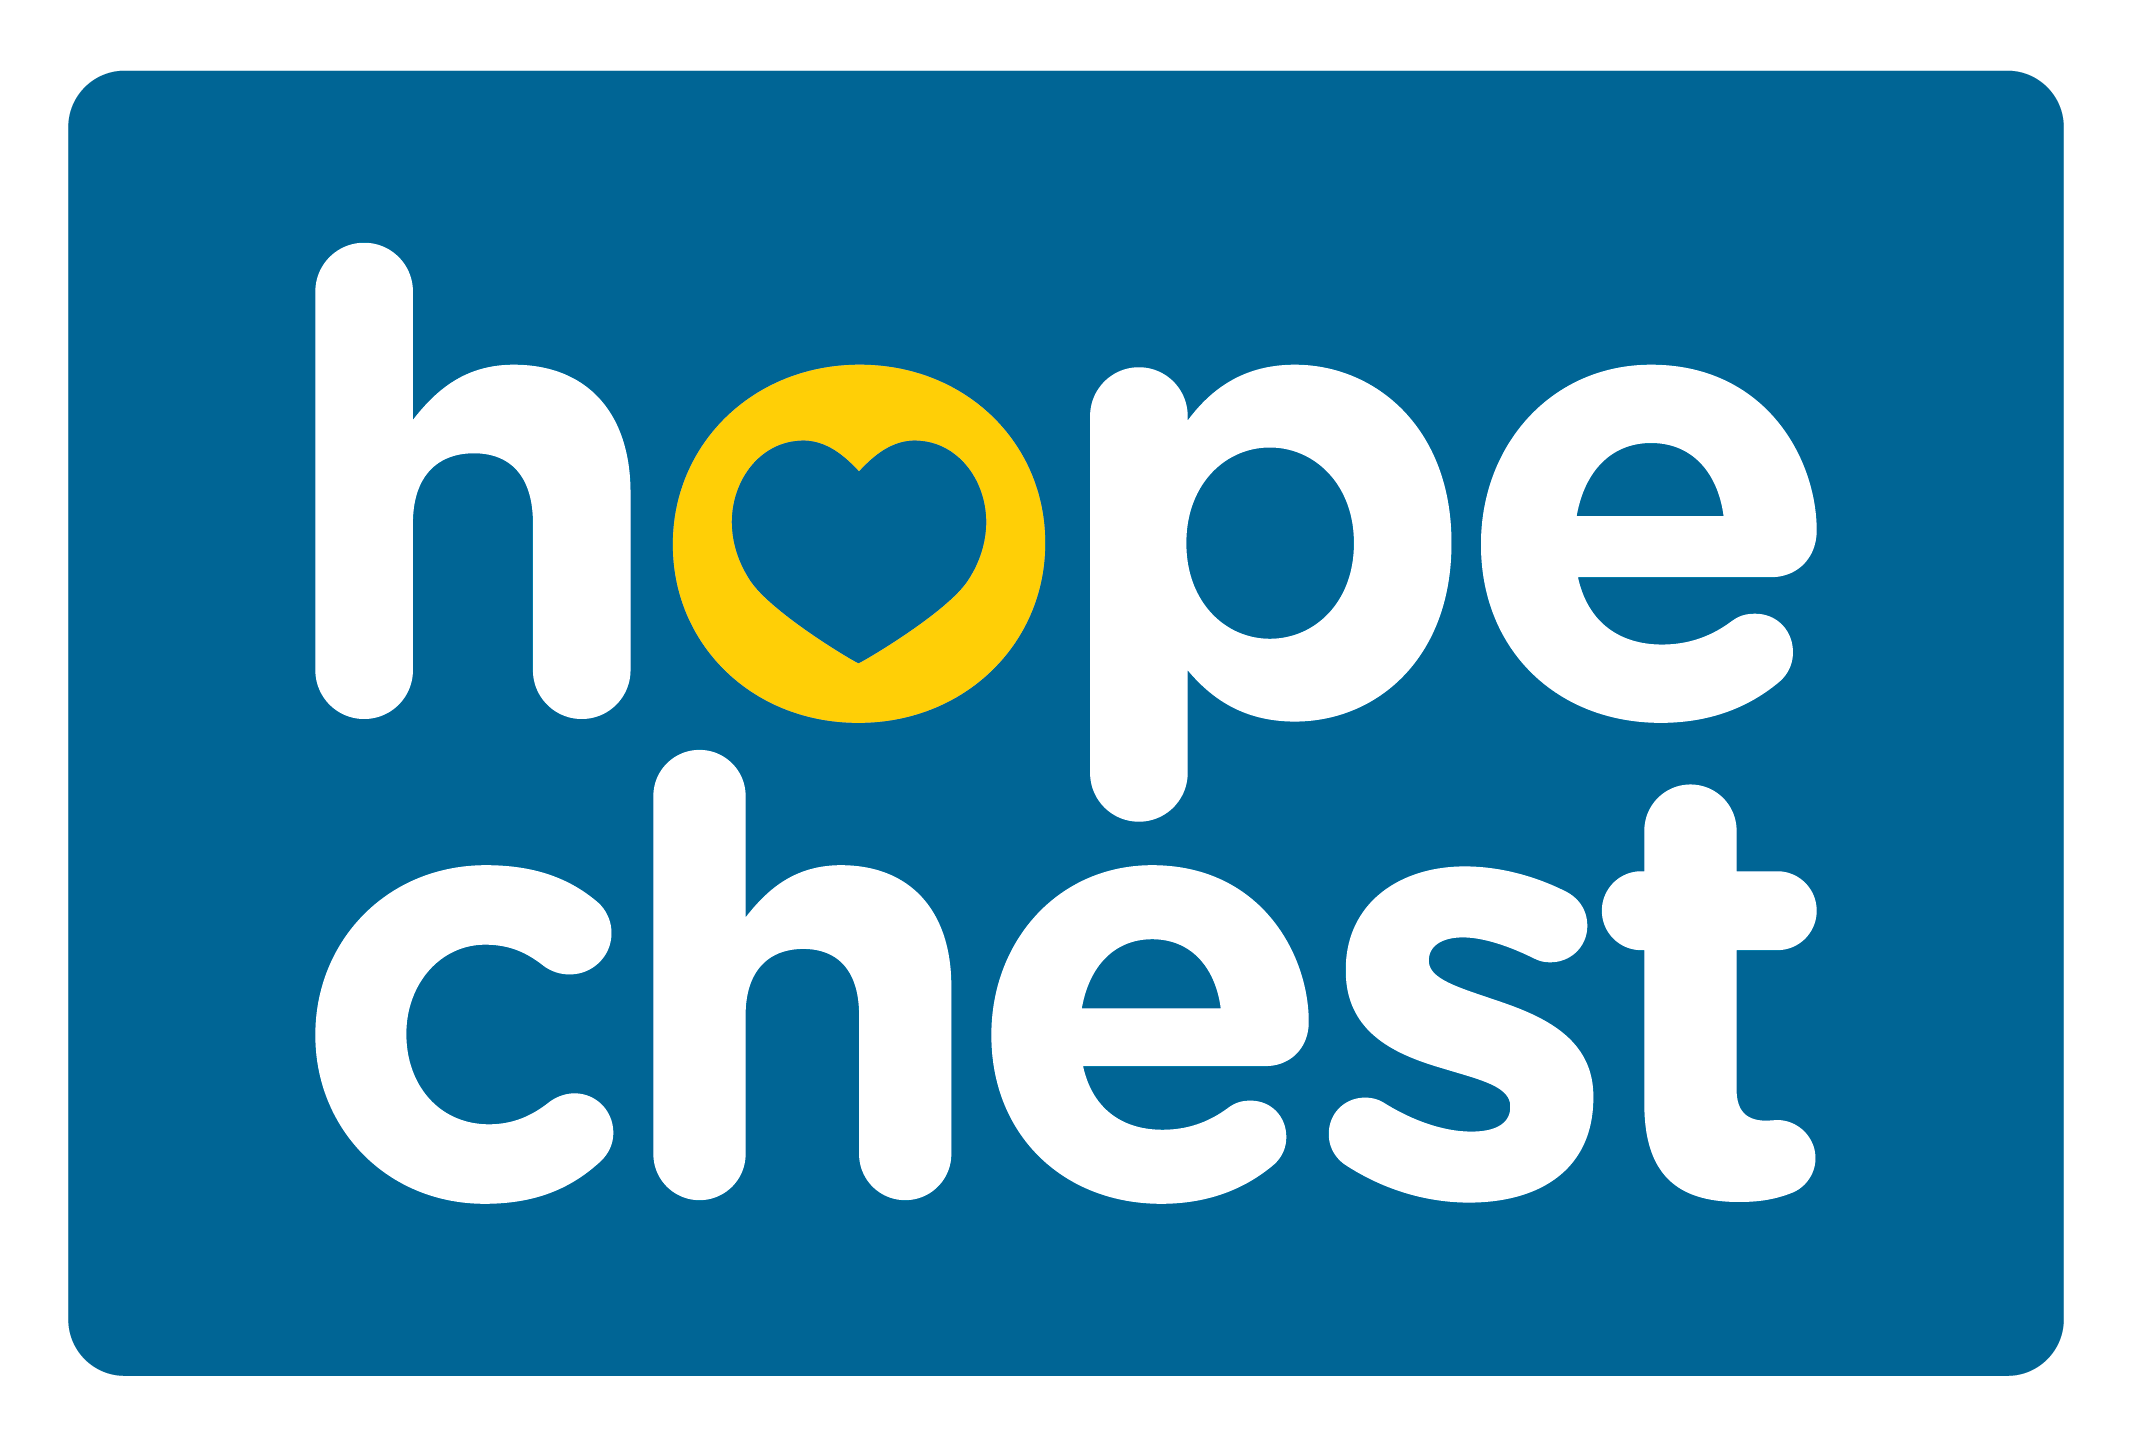 hope chest